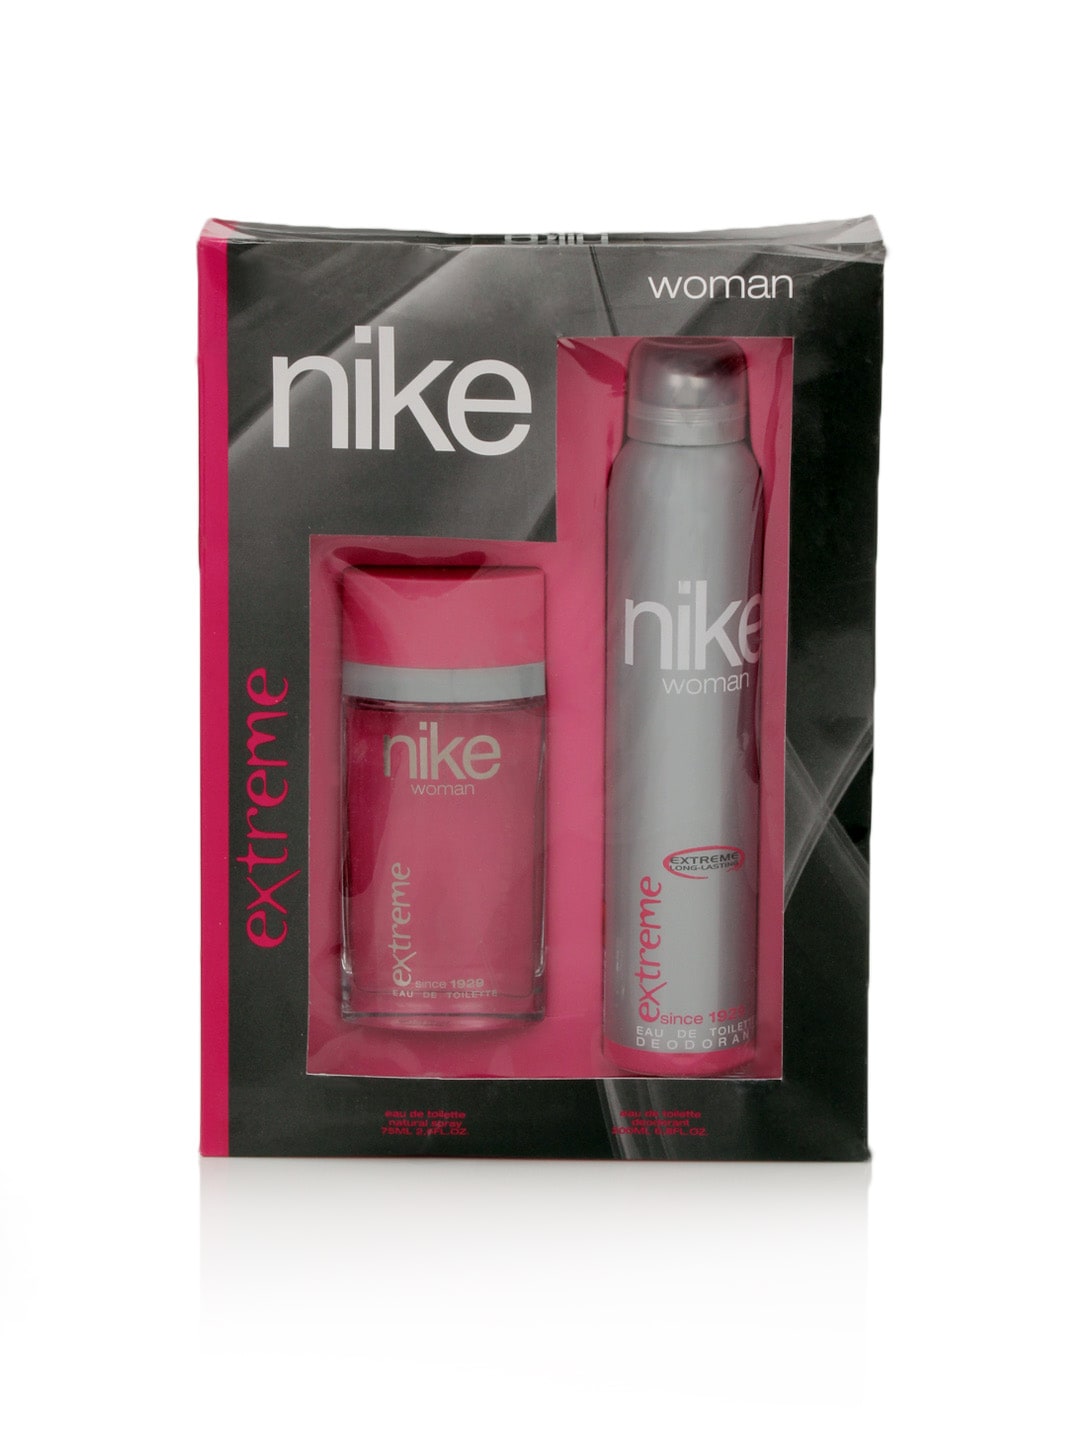 Nike Fragrances Women Extreme Fragrance Gift Set